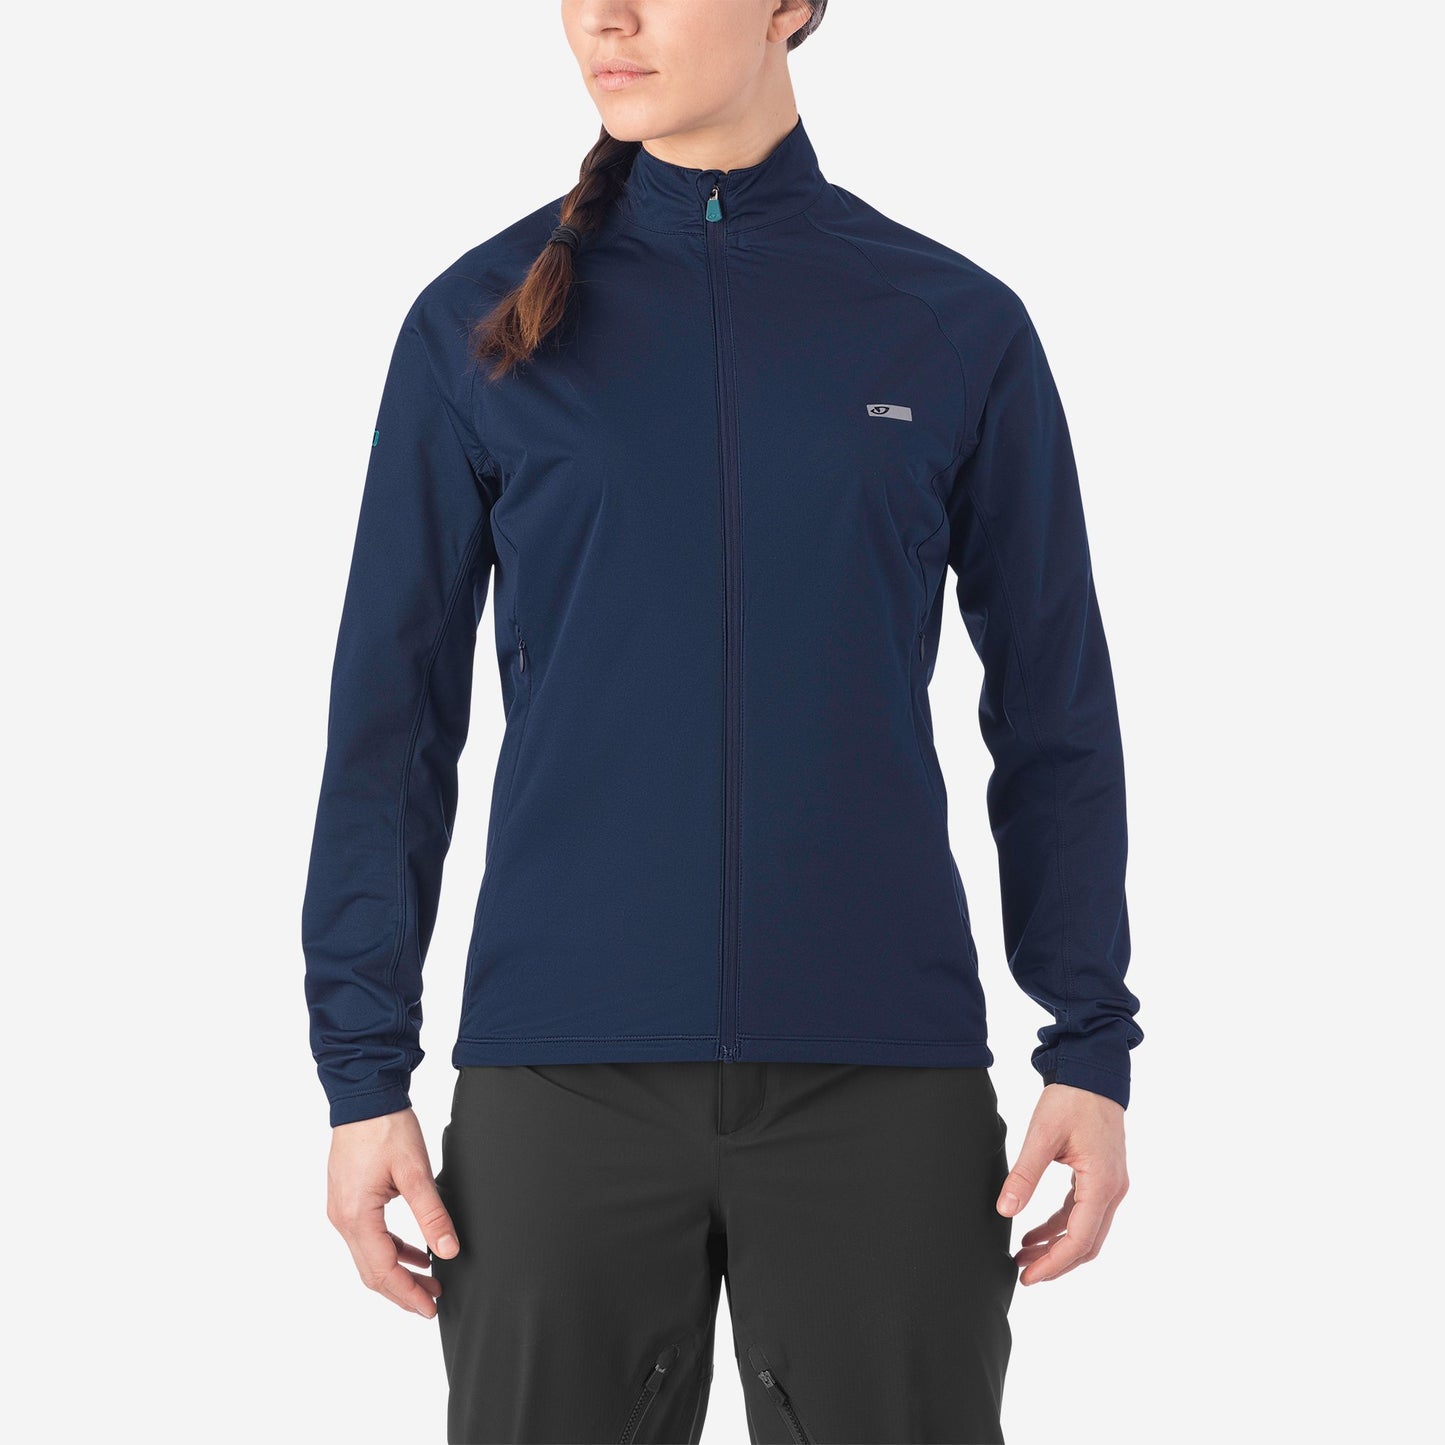 Giro Womens Stow H2O Jacket - Midnight Blue - Size S